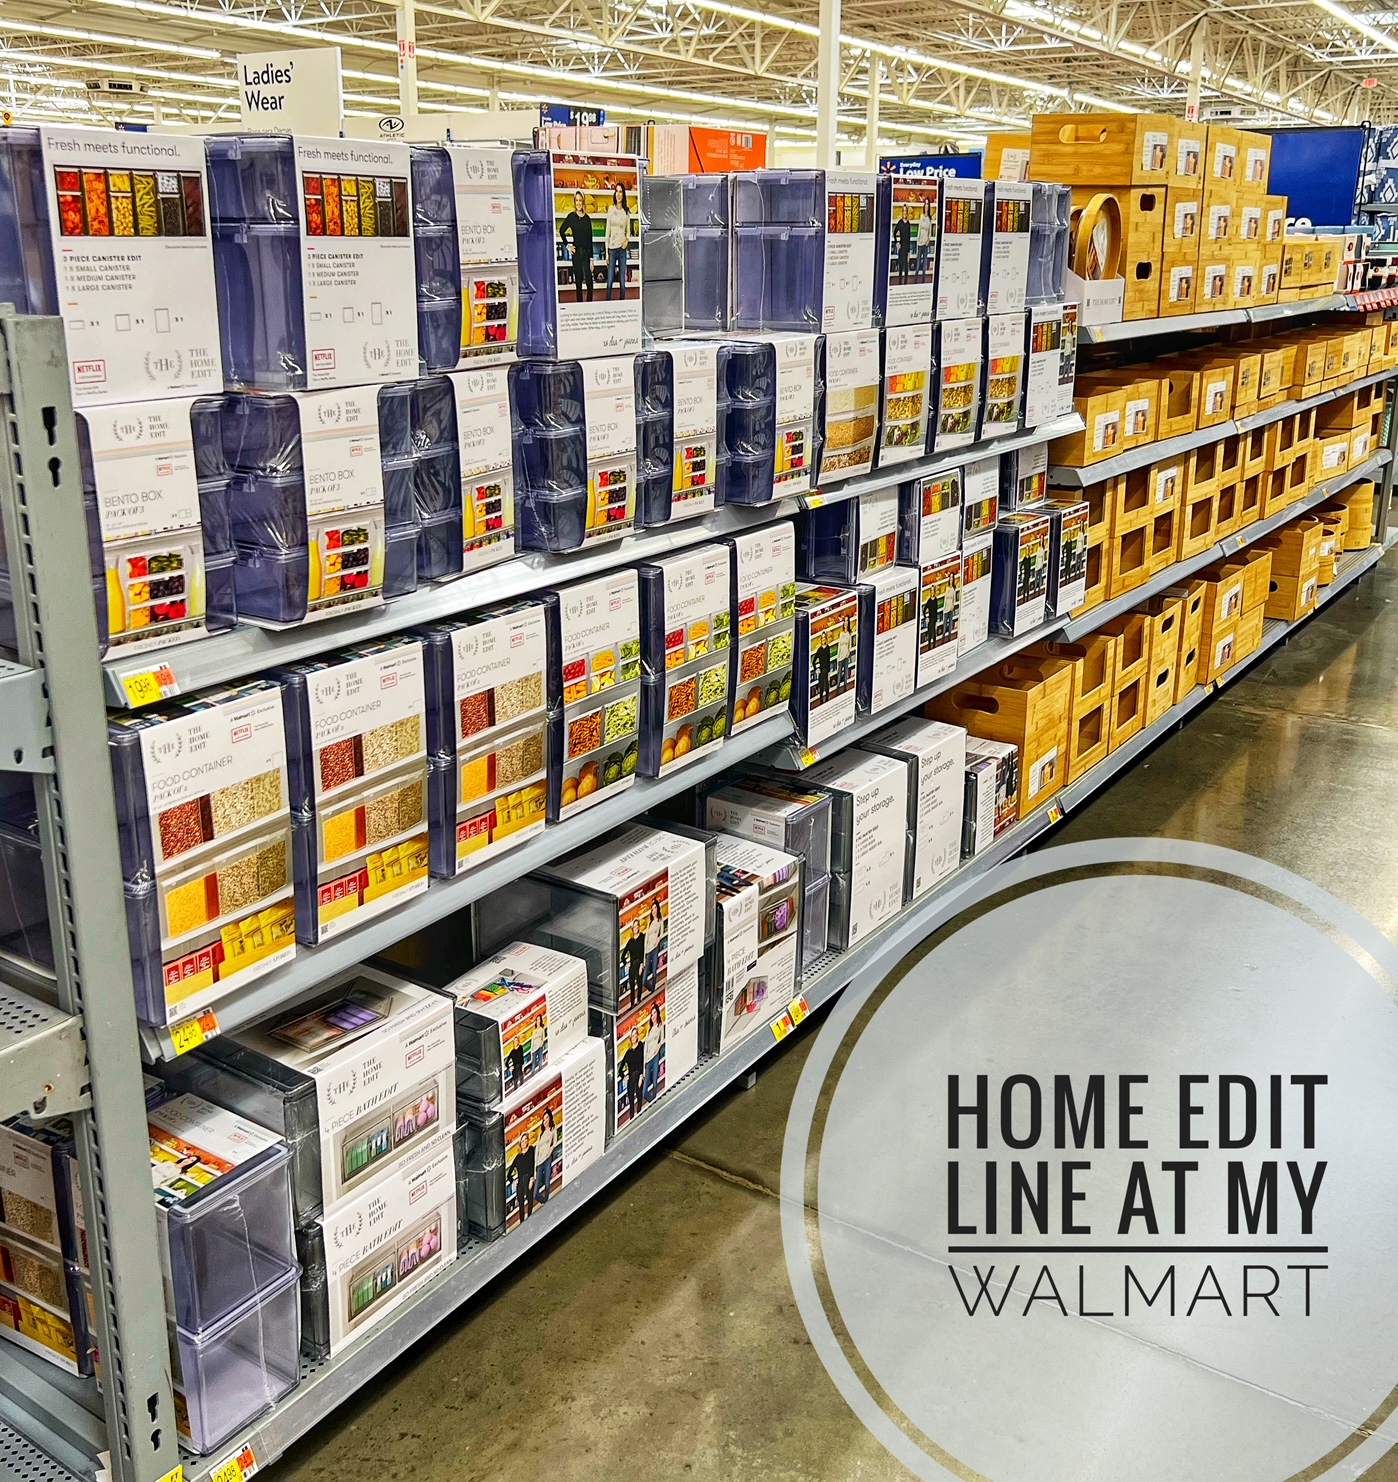 The Home Edit Walmart